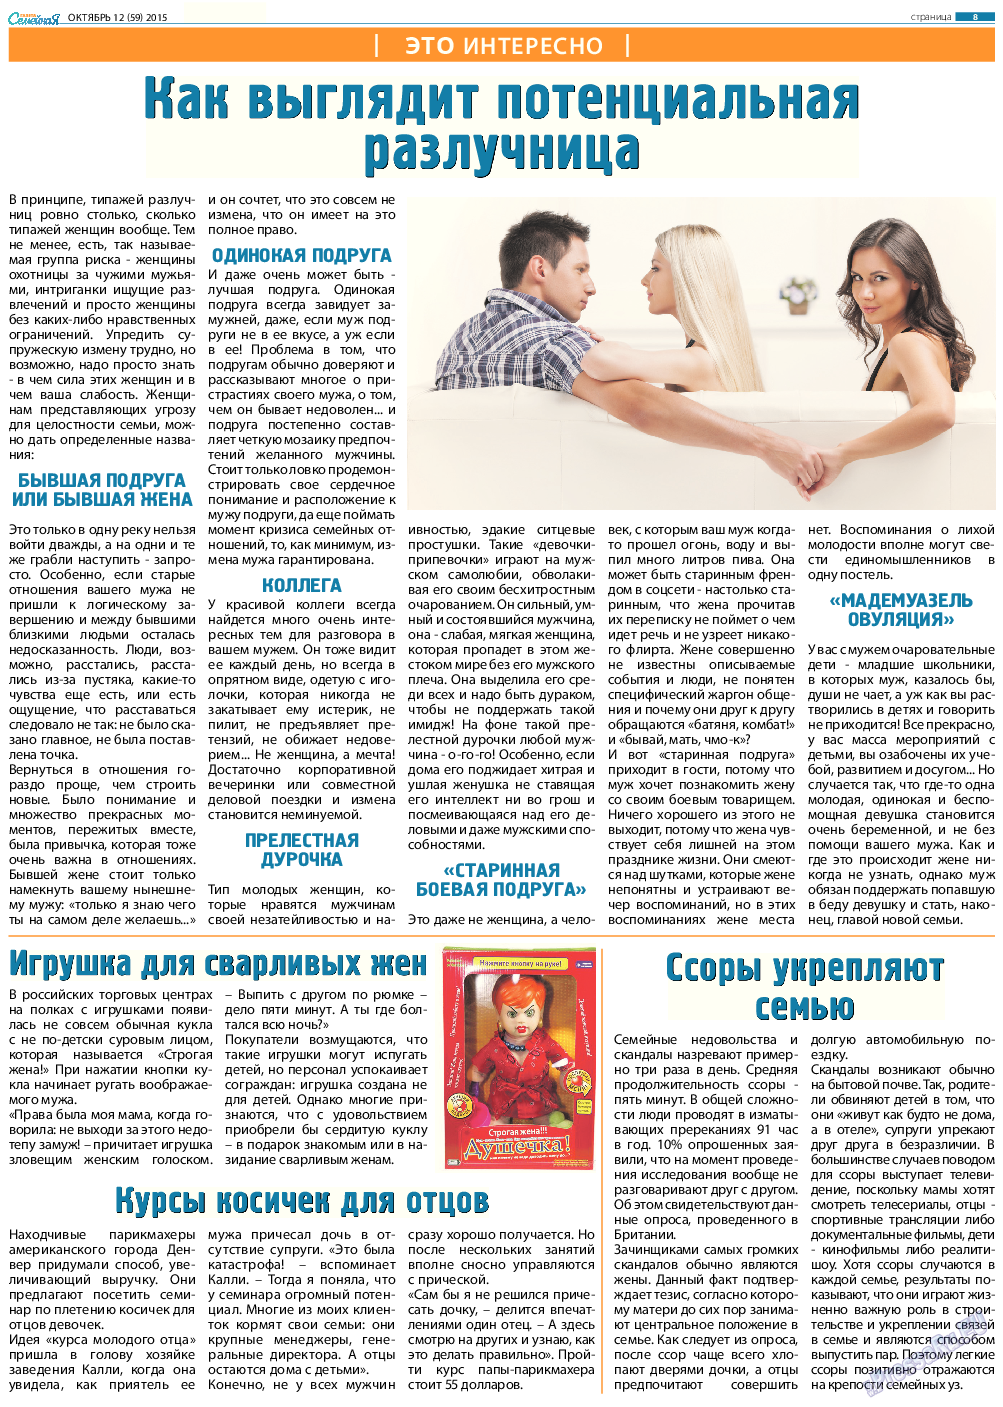 Семейная газета, газета. 2015 №12 стр.8